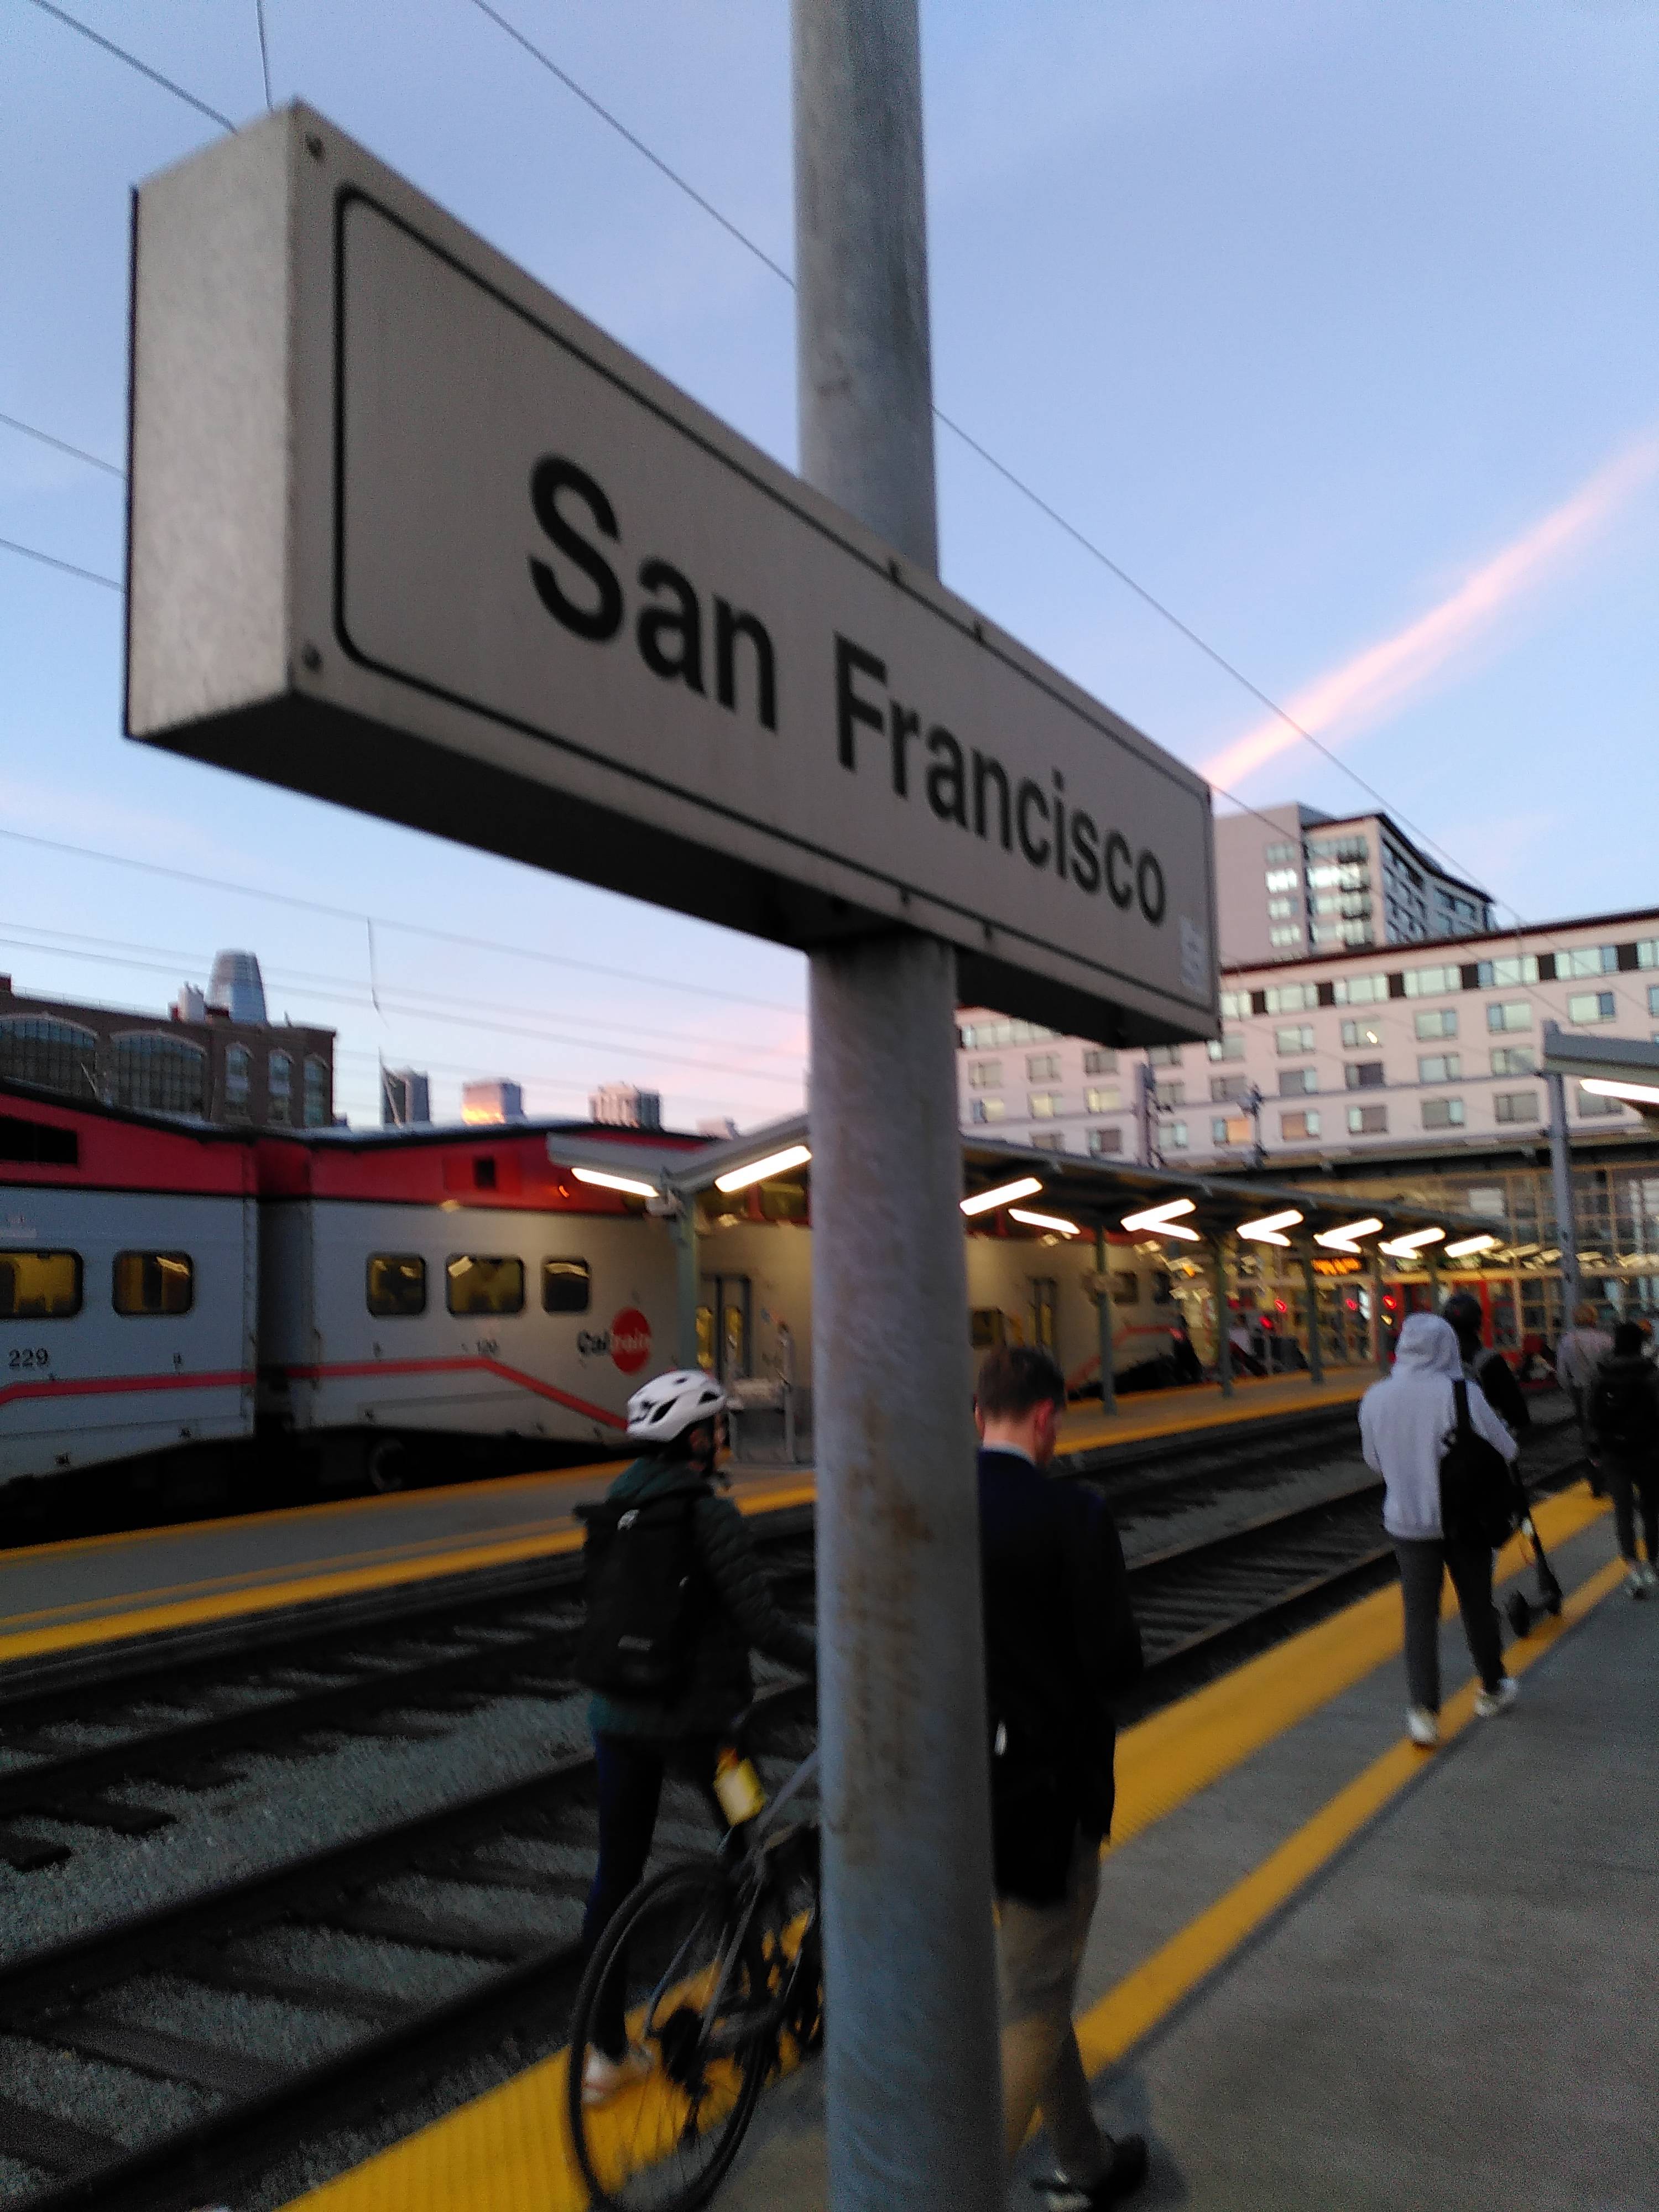 Train station sign saying "San Francisco".